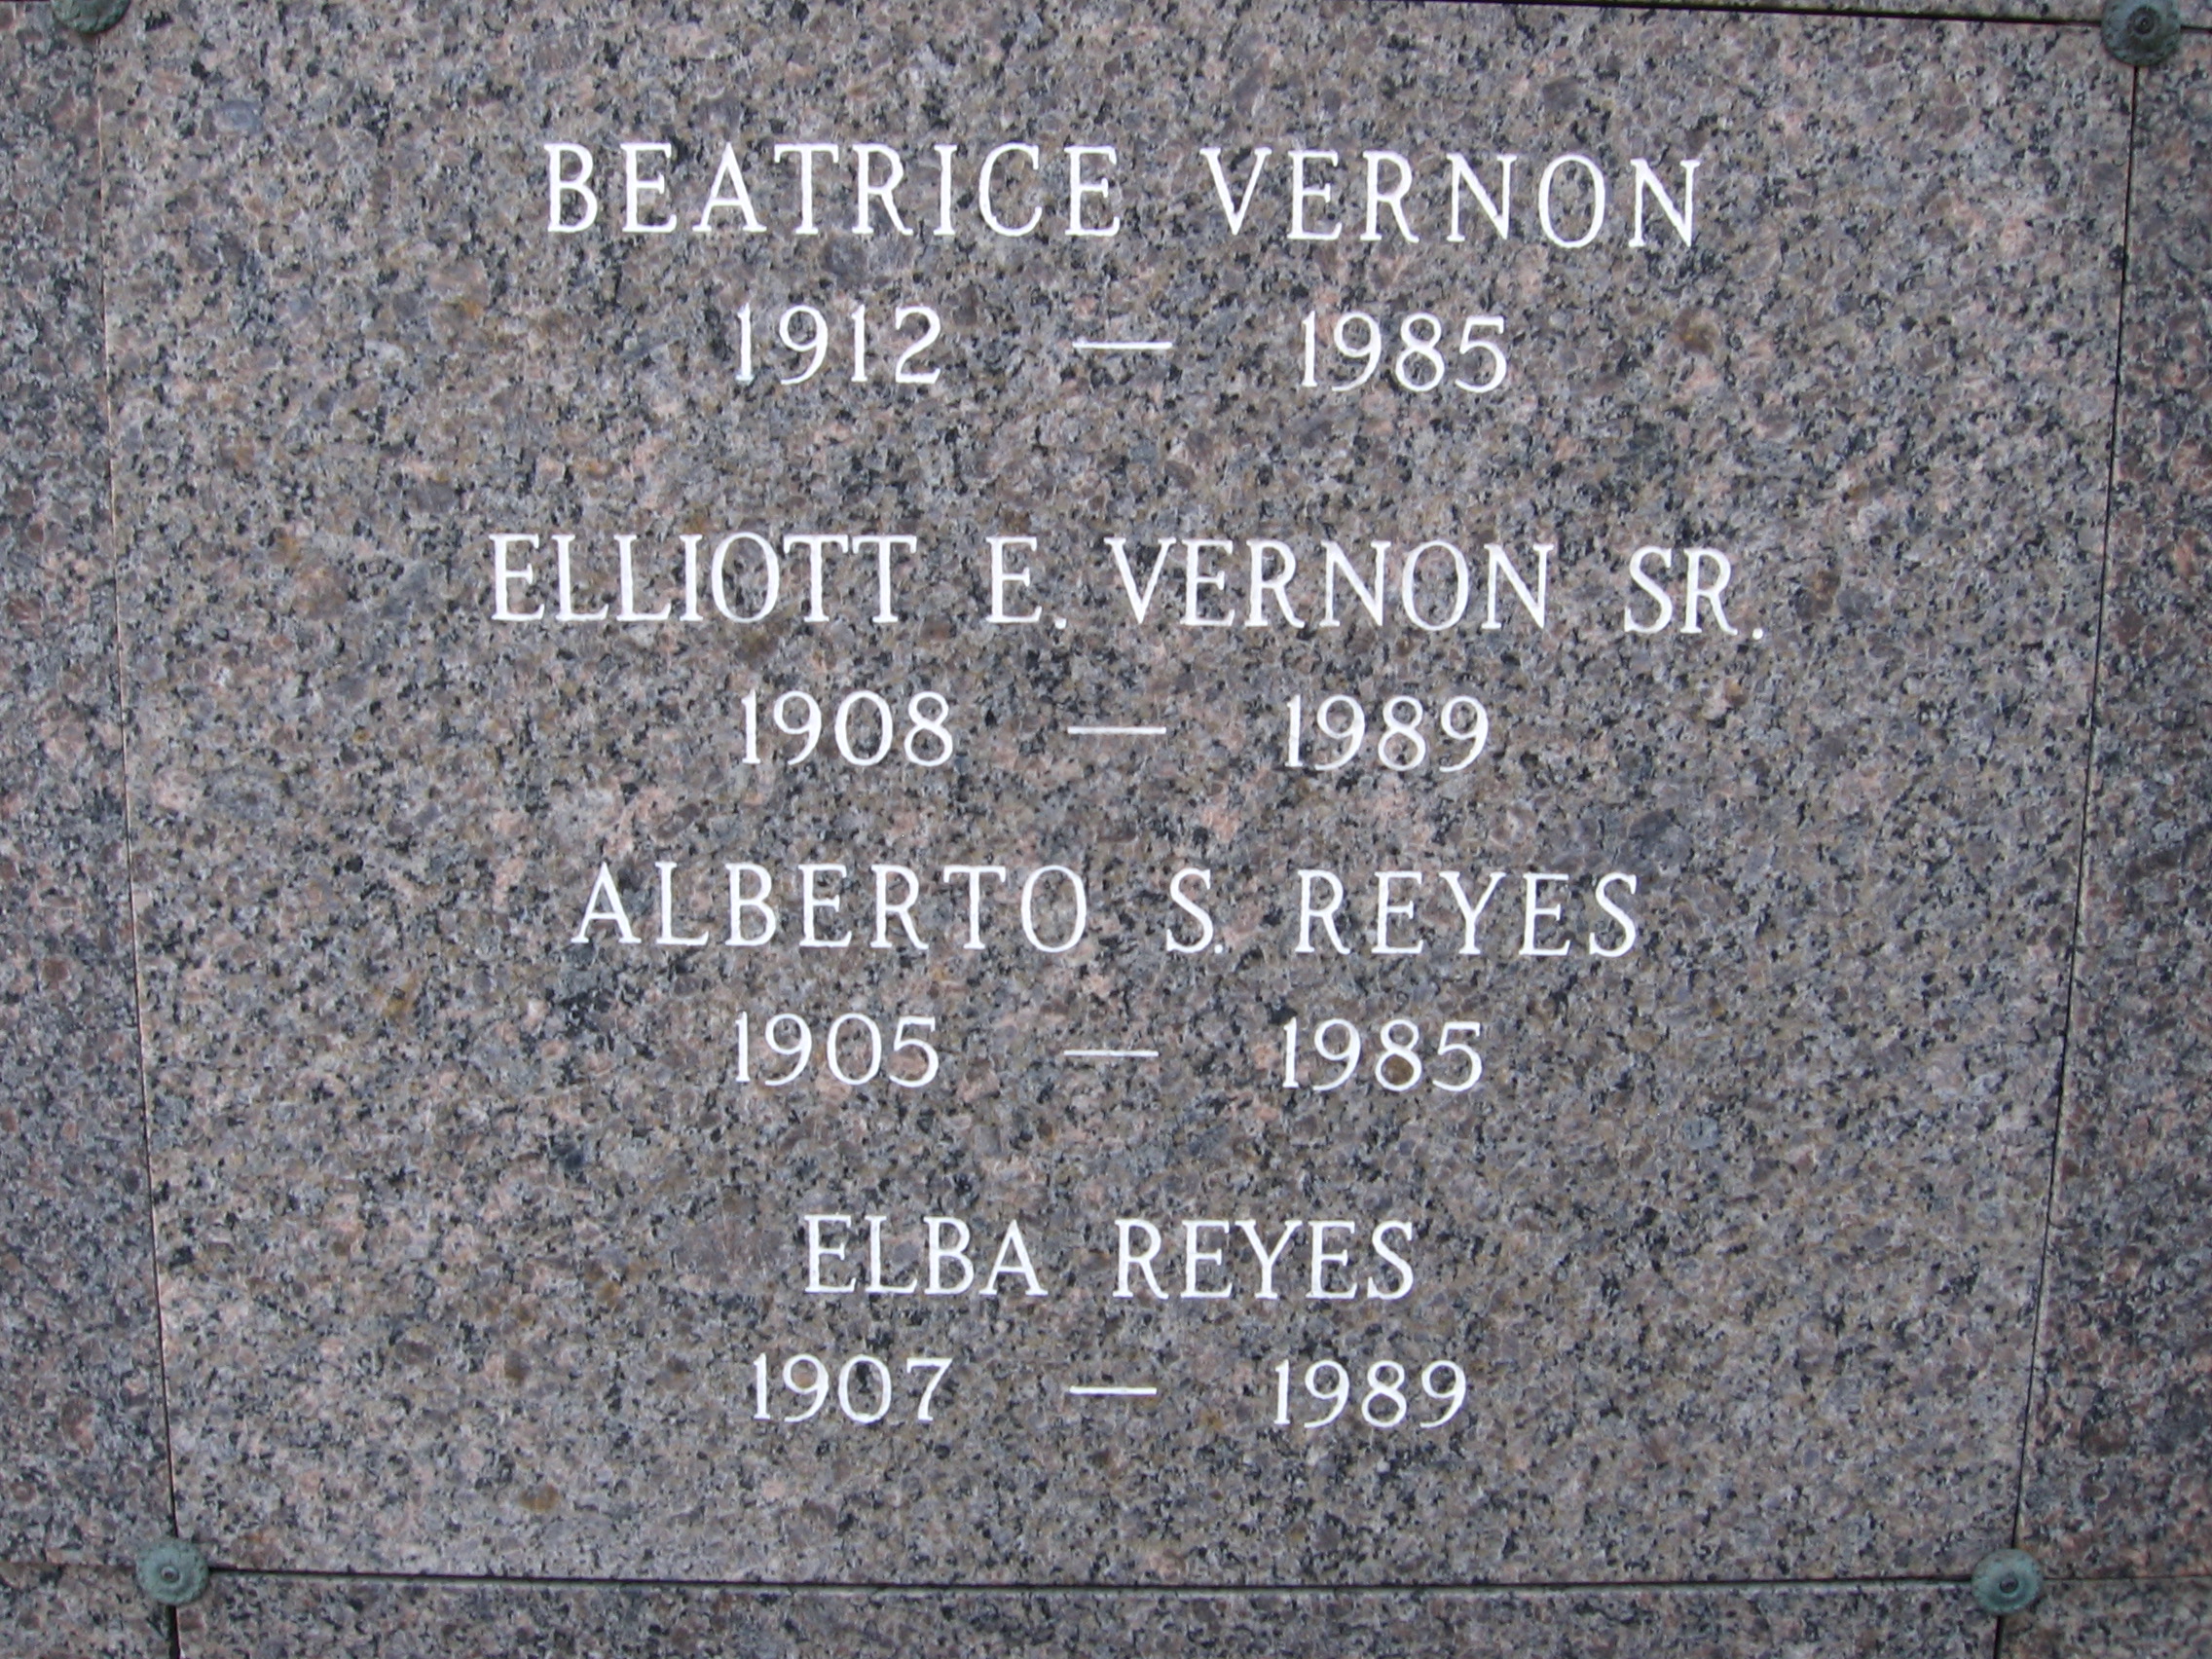 Elliott E Vernon, Sr